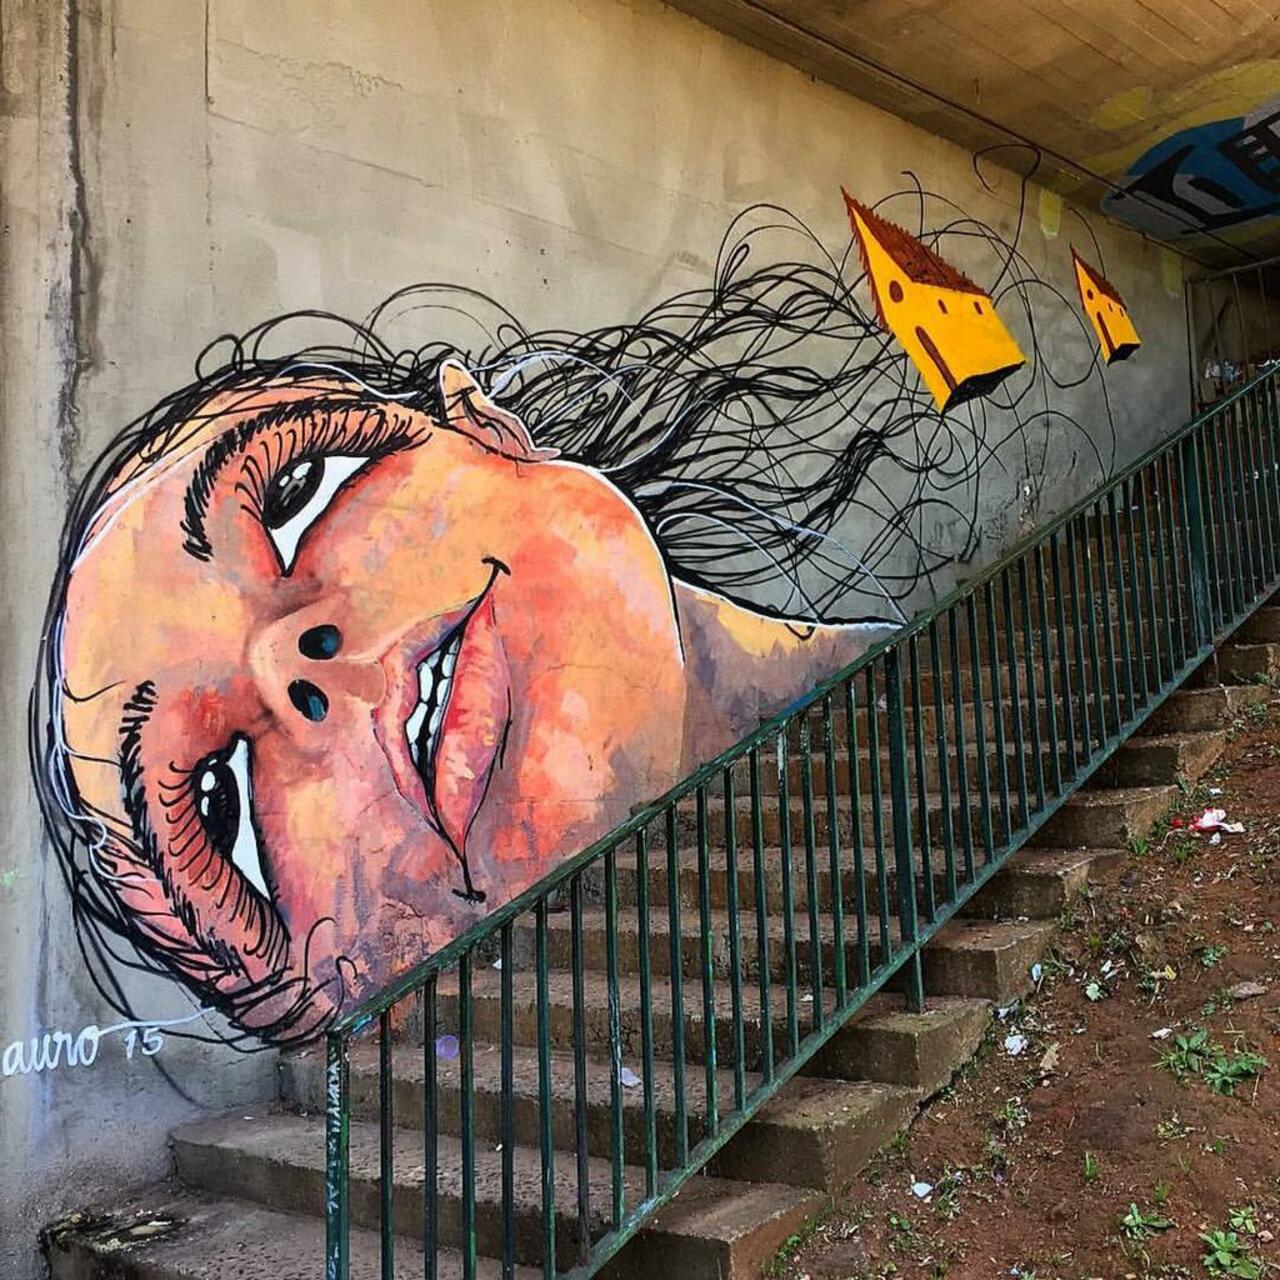 Street Art by Reveracidade in São Paulo 

#art #graffiti #mural #streetart http://t.co/sxvr03s9Qr